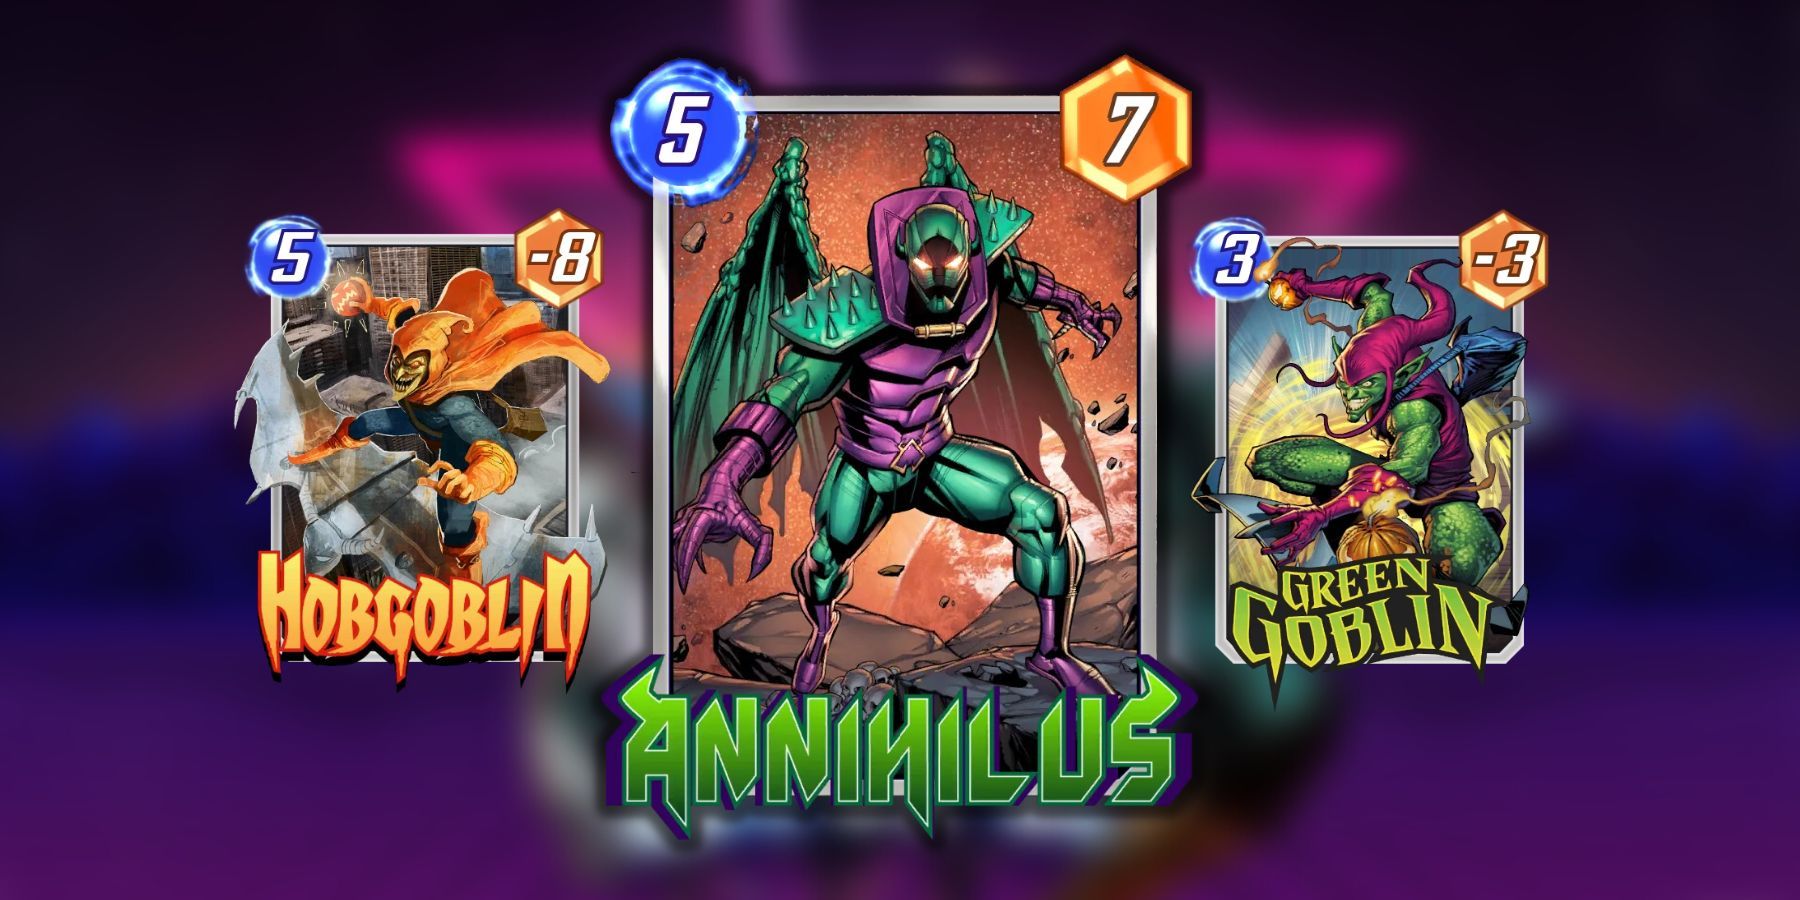 annihilus, hobgoblin, green goblin cards in marvel snap.